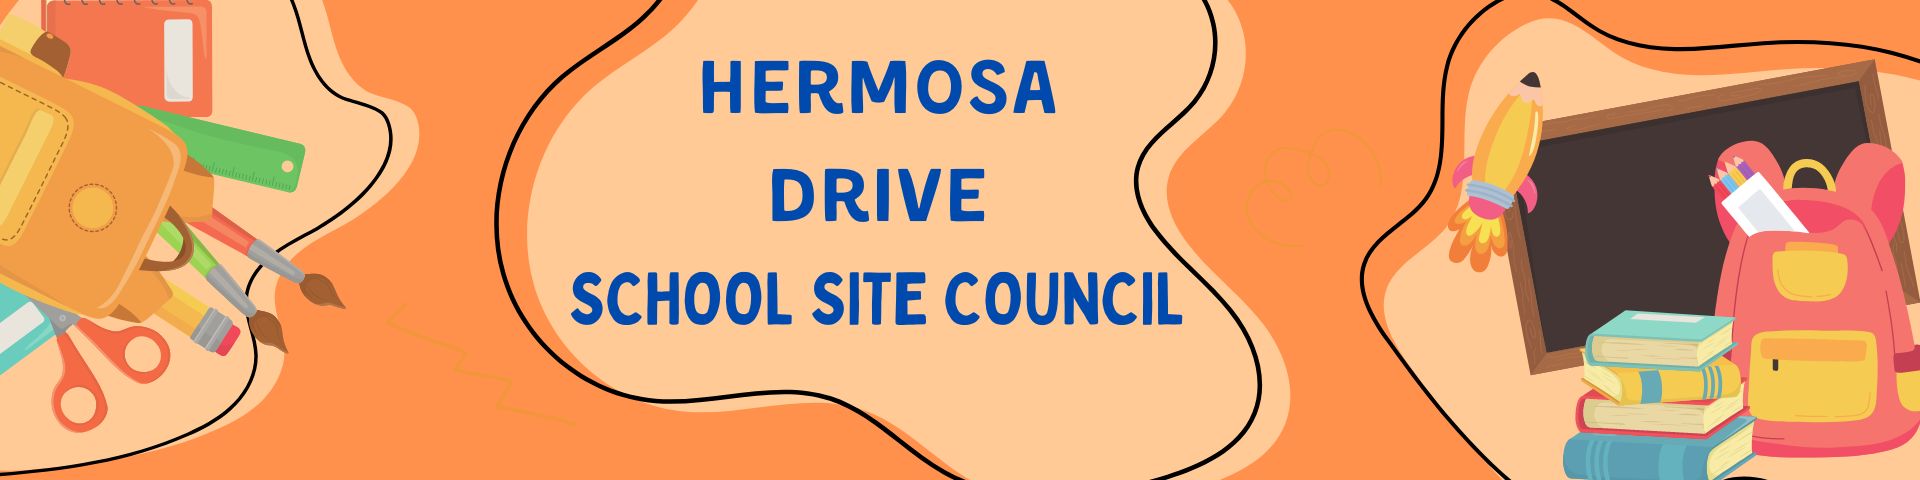 Hermosa Drive School Site Council